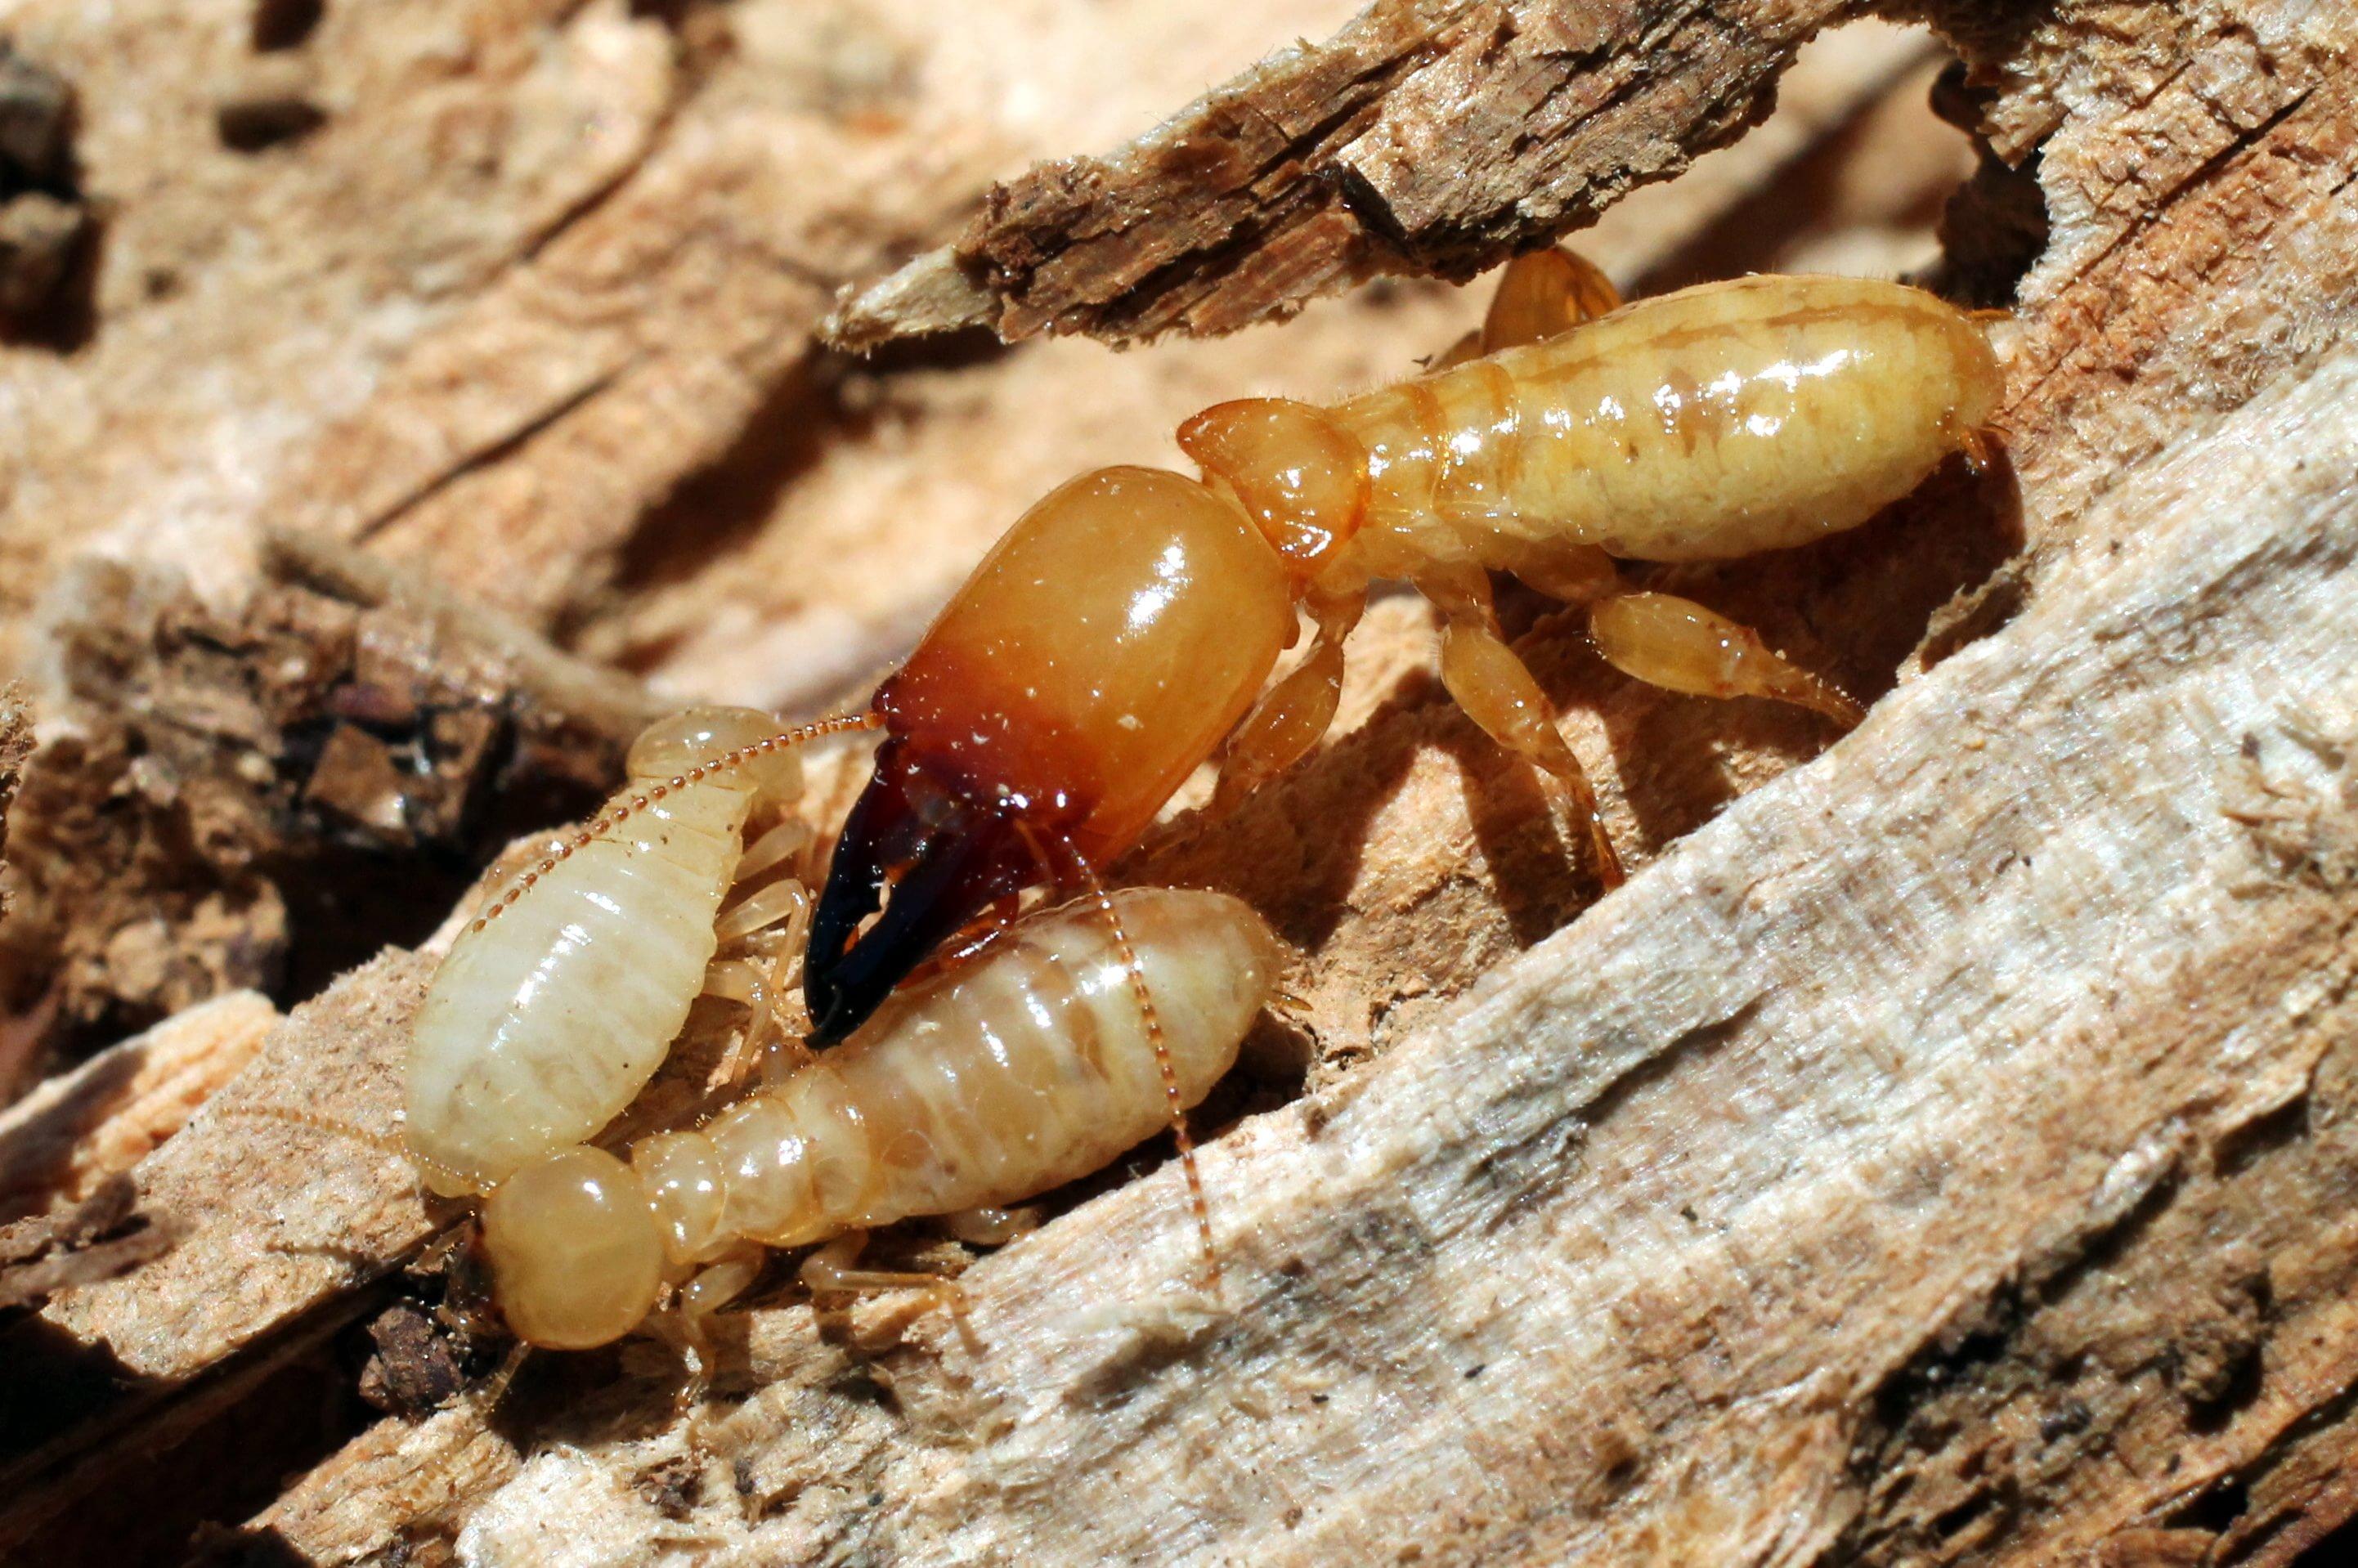 Termites Wallpaper High Quality